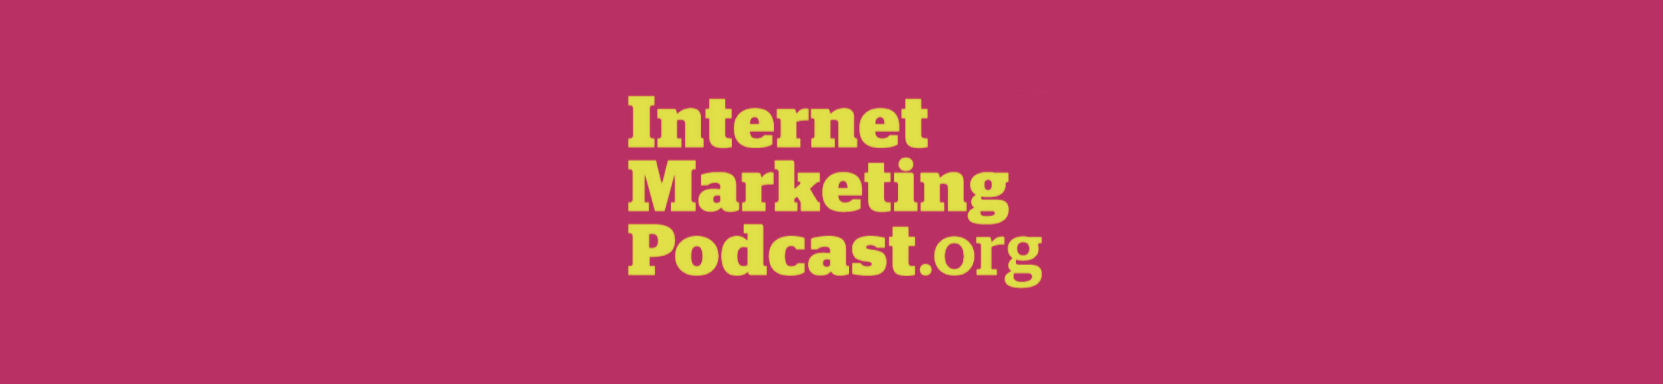 Internet Marketing Podcast